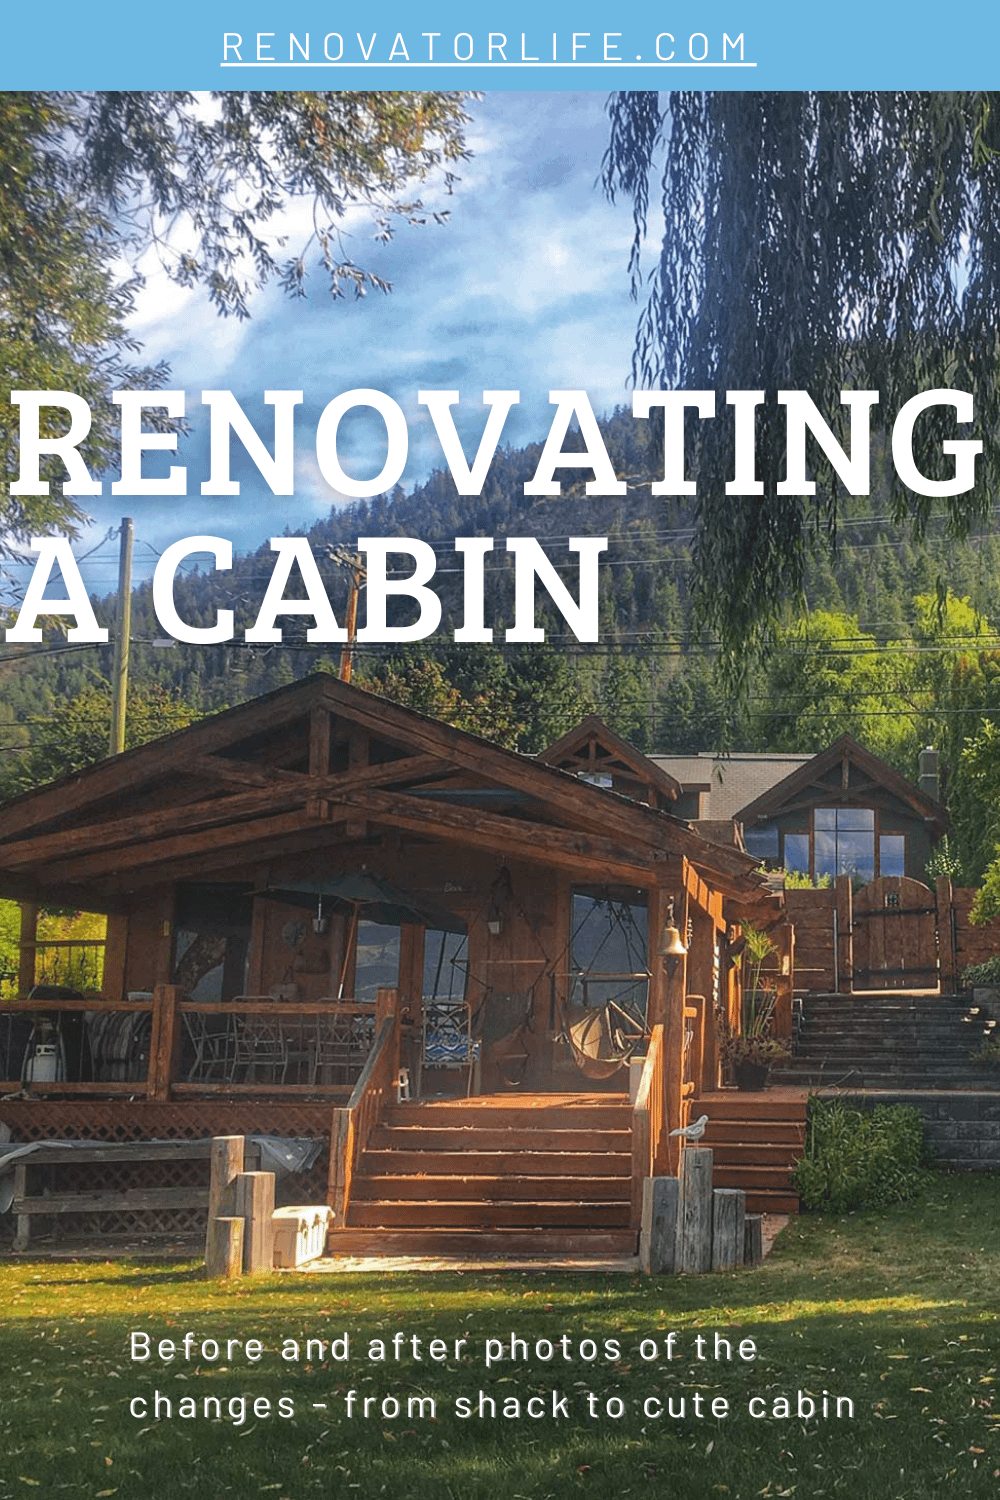 Renovating a cabin